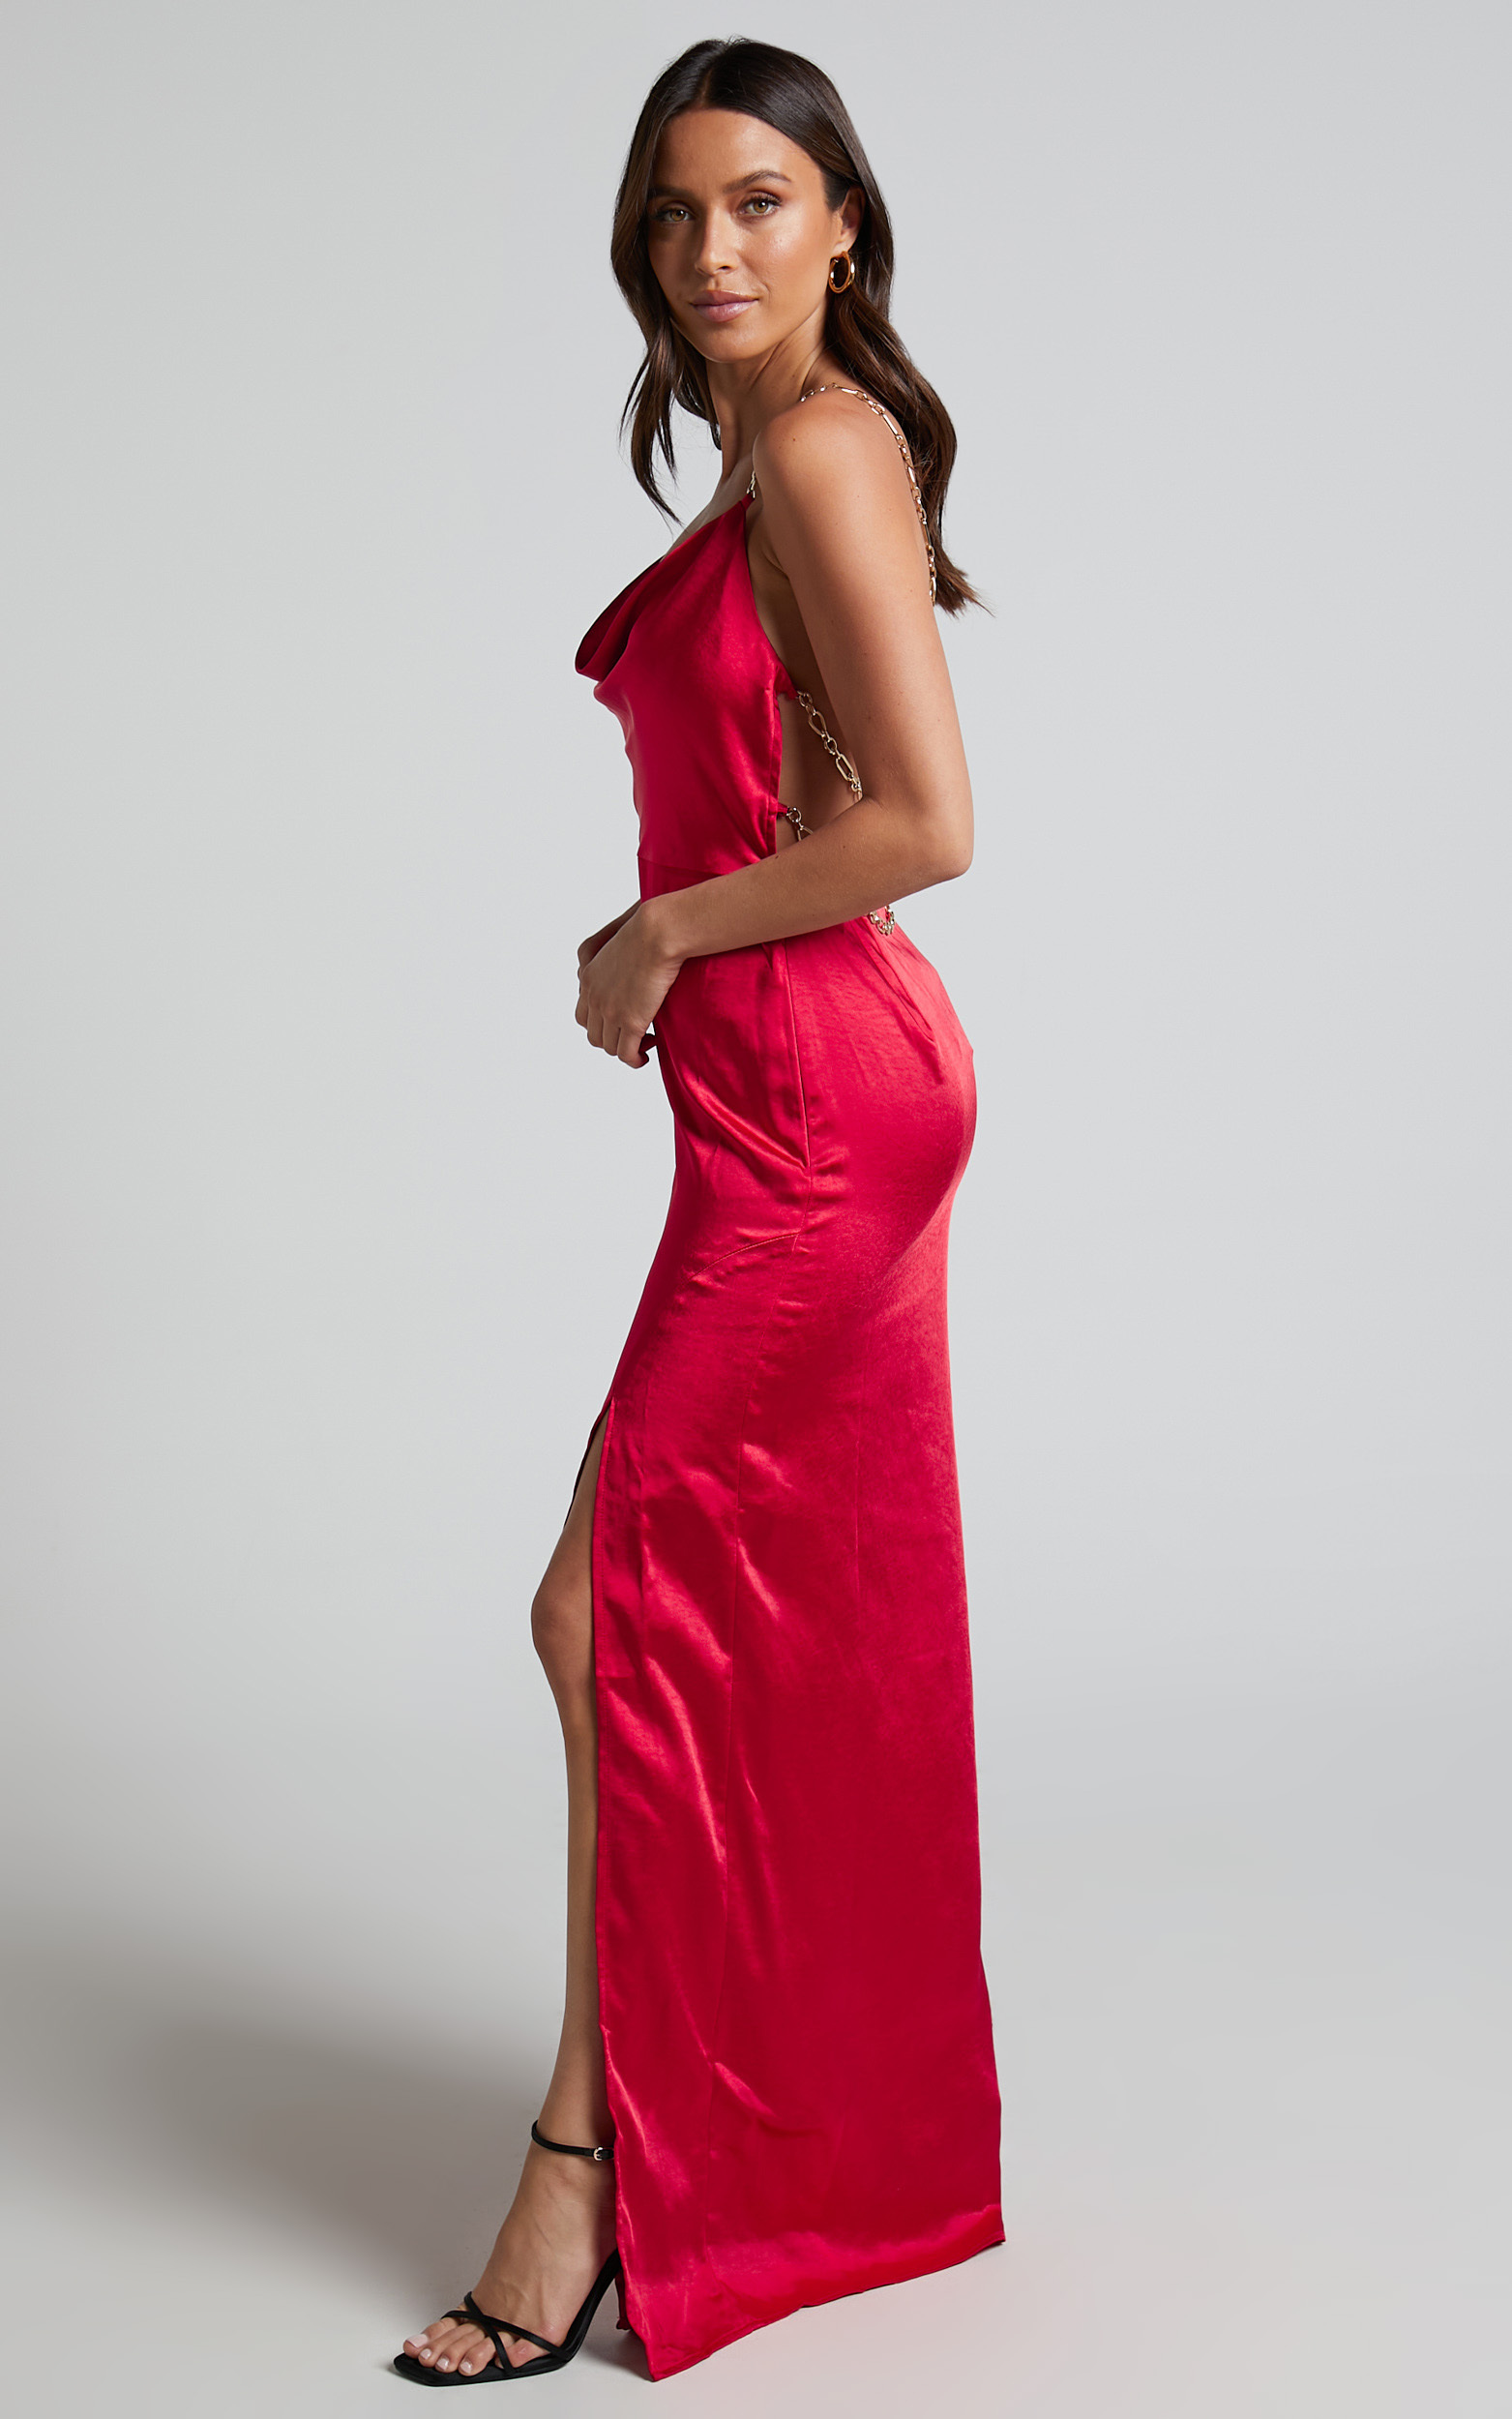 Bravia Maxi Dress - Chain Strap Open Back Satin Dress in Red | Showpo